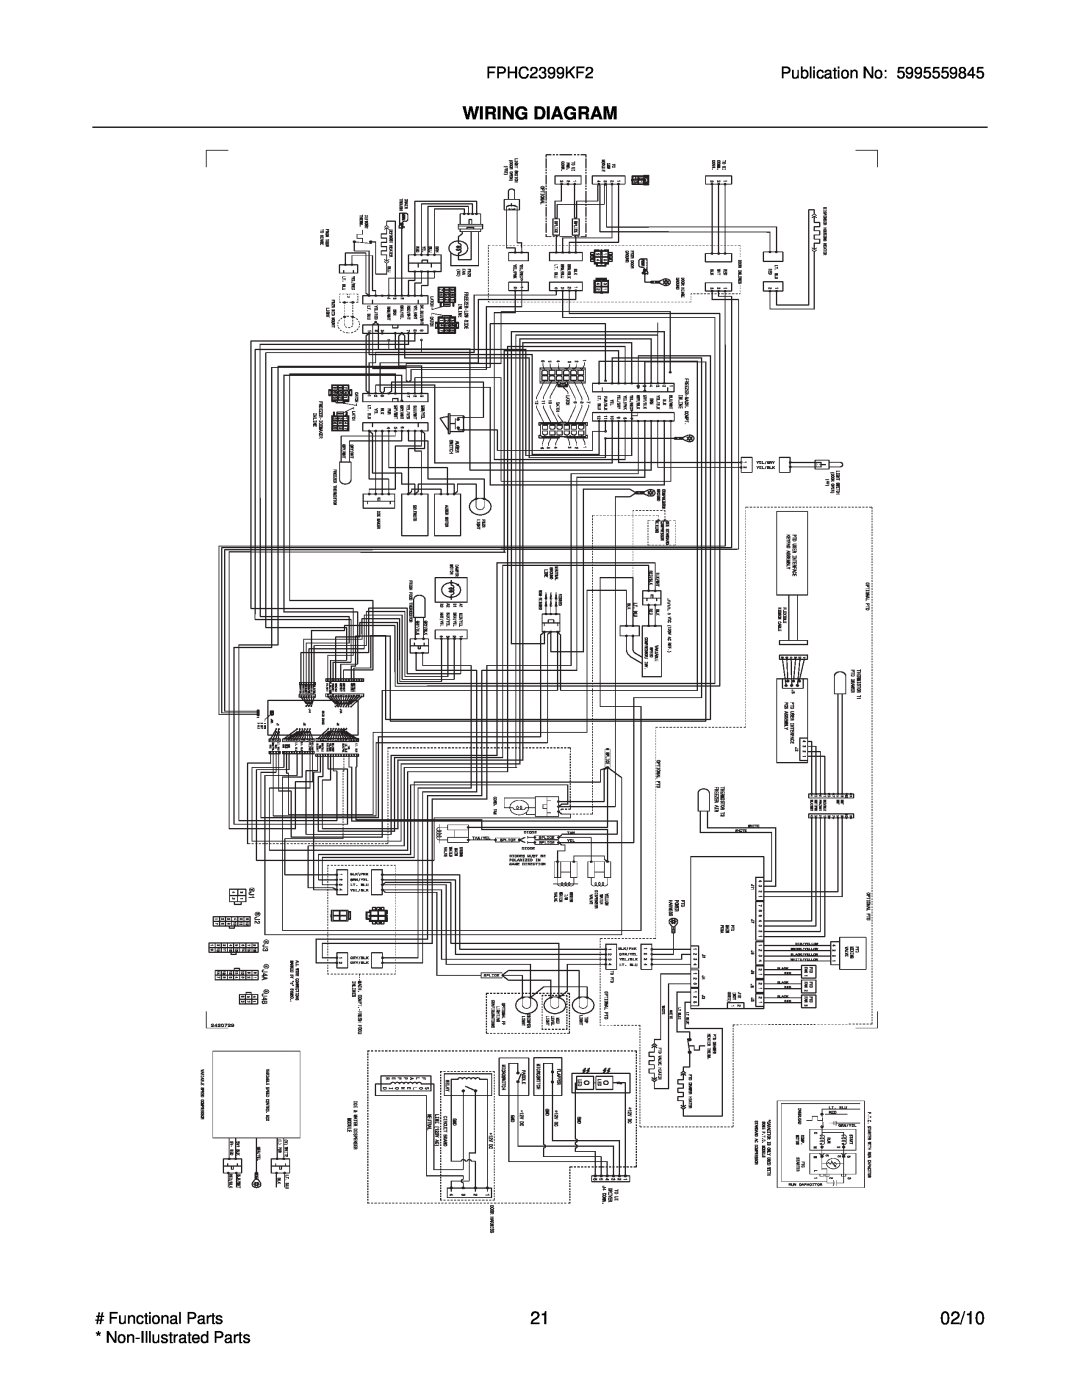 Frigidaire FPHC2339K manual Wiring Diagram, 02/10 